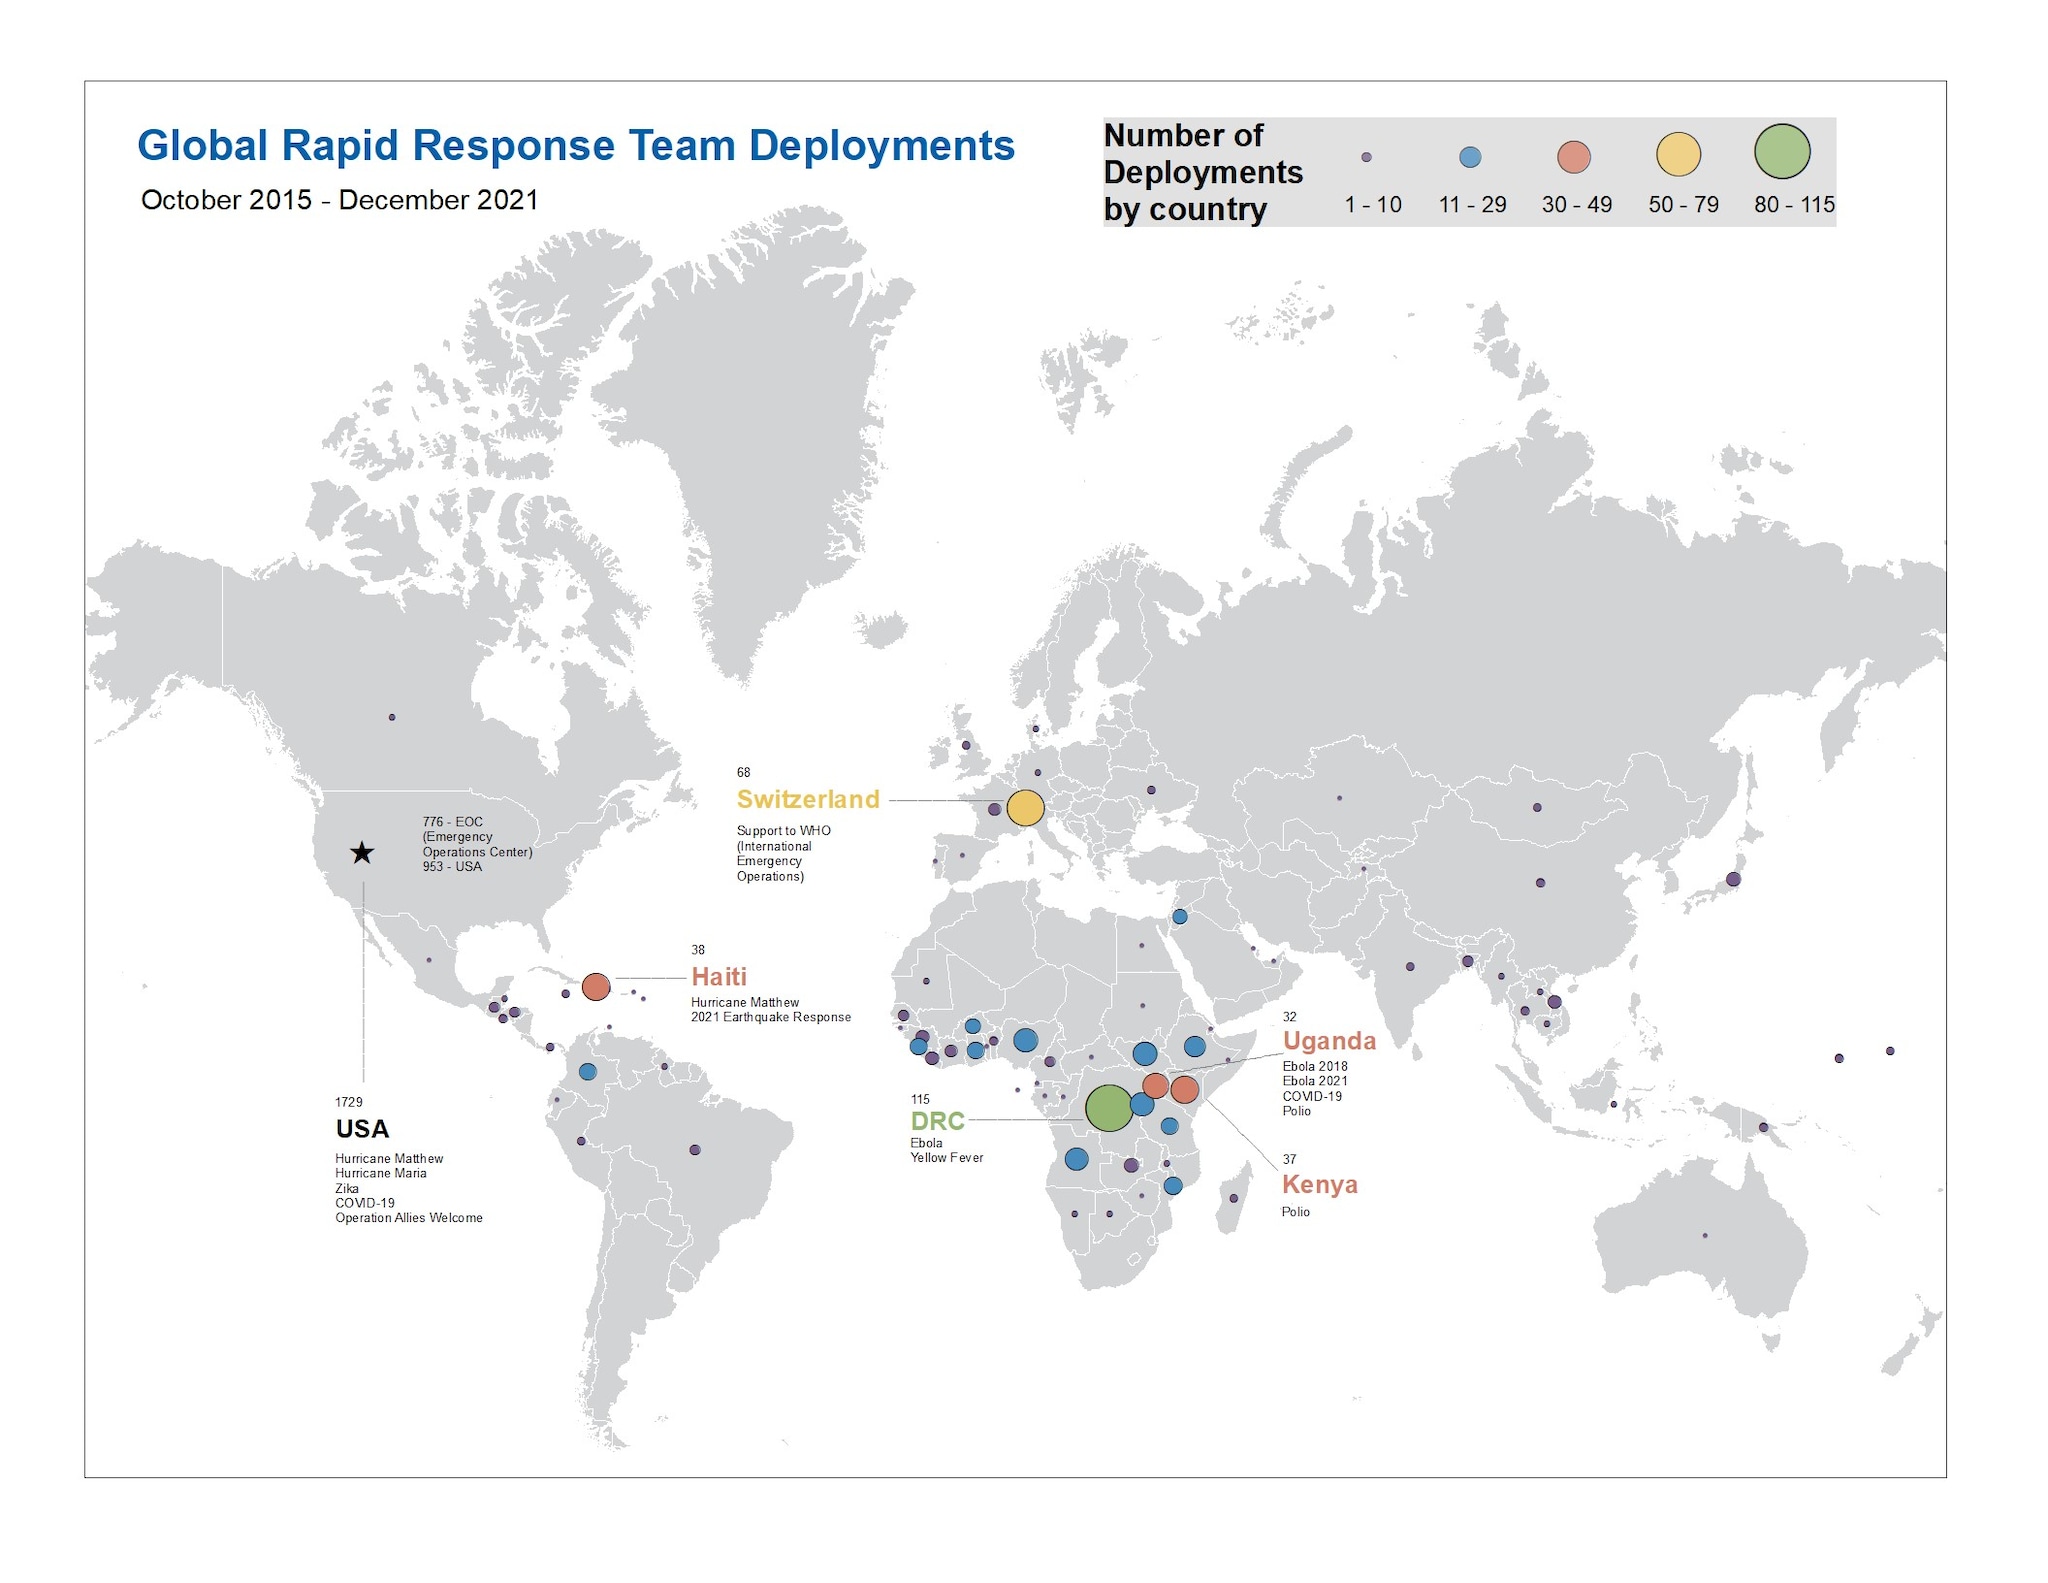 Global Rapid Response Team Deployments, October 2015-December 2021